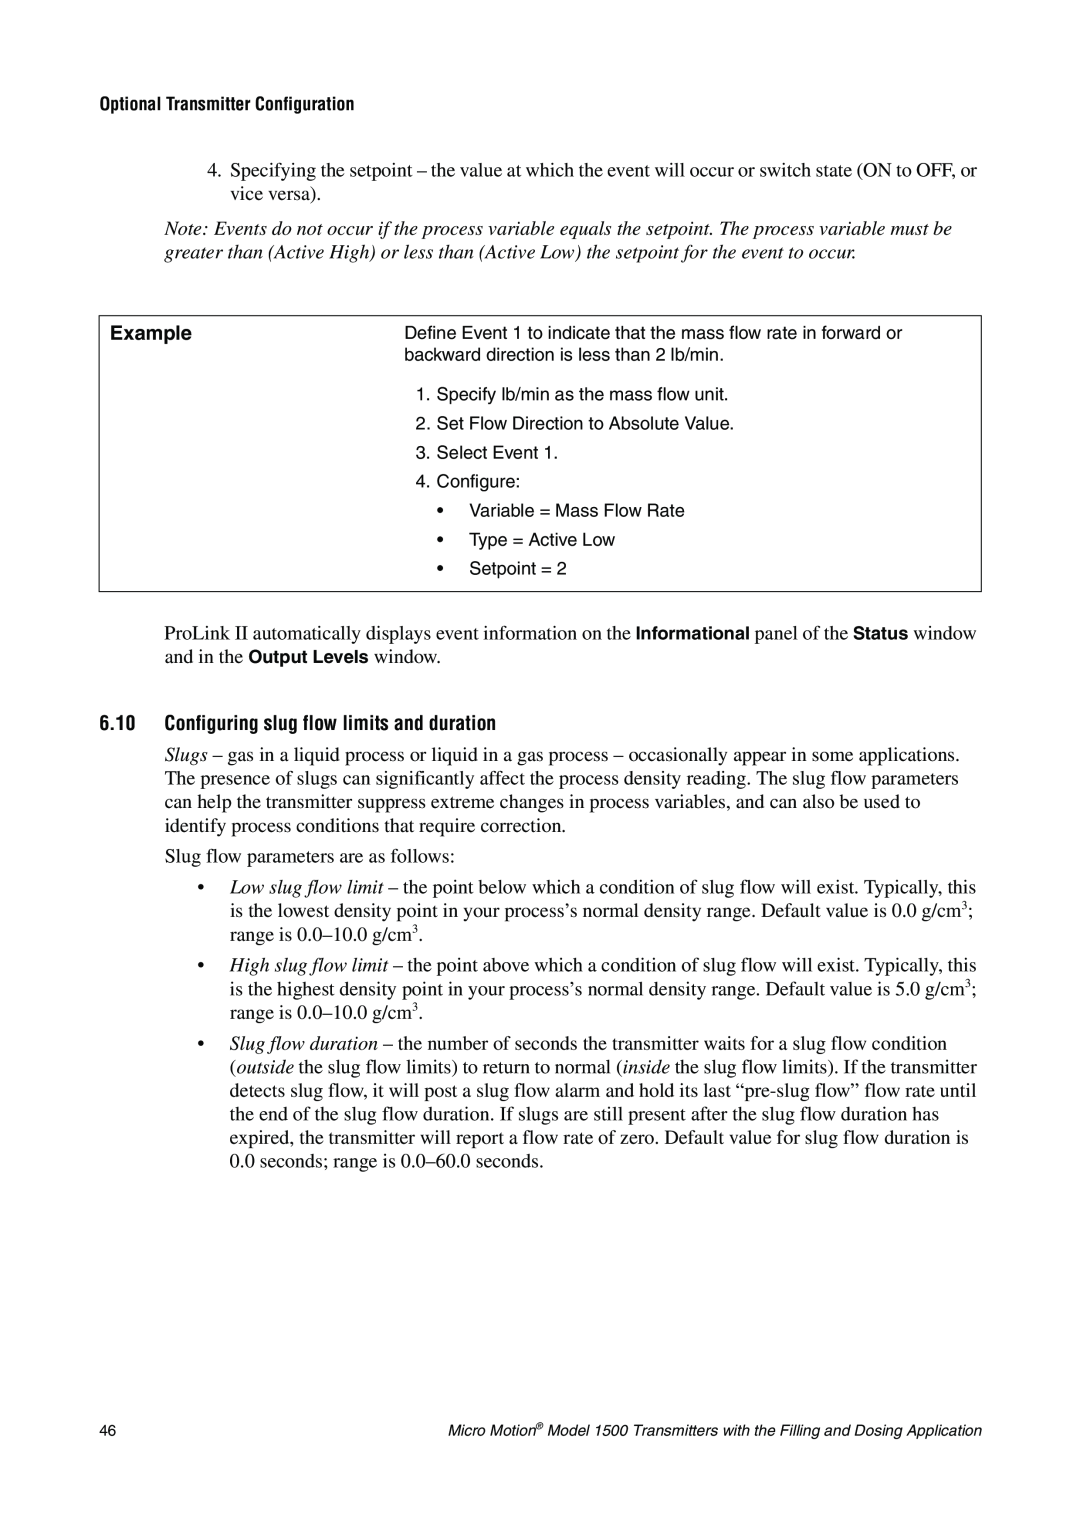 Emerson Process Management 1500 manual Example, 6.10Configuring slug flow limits and duration 